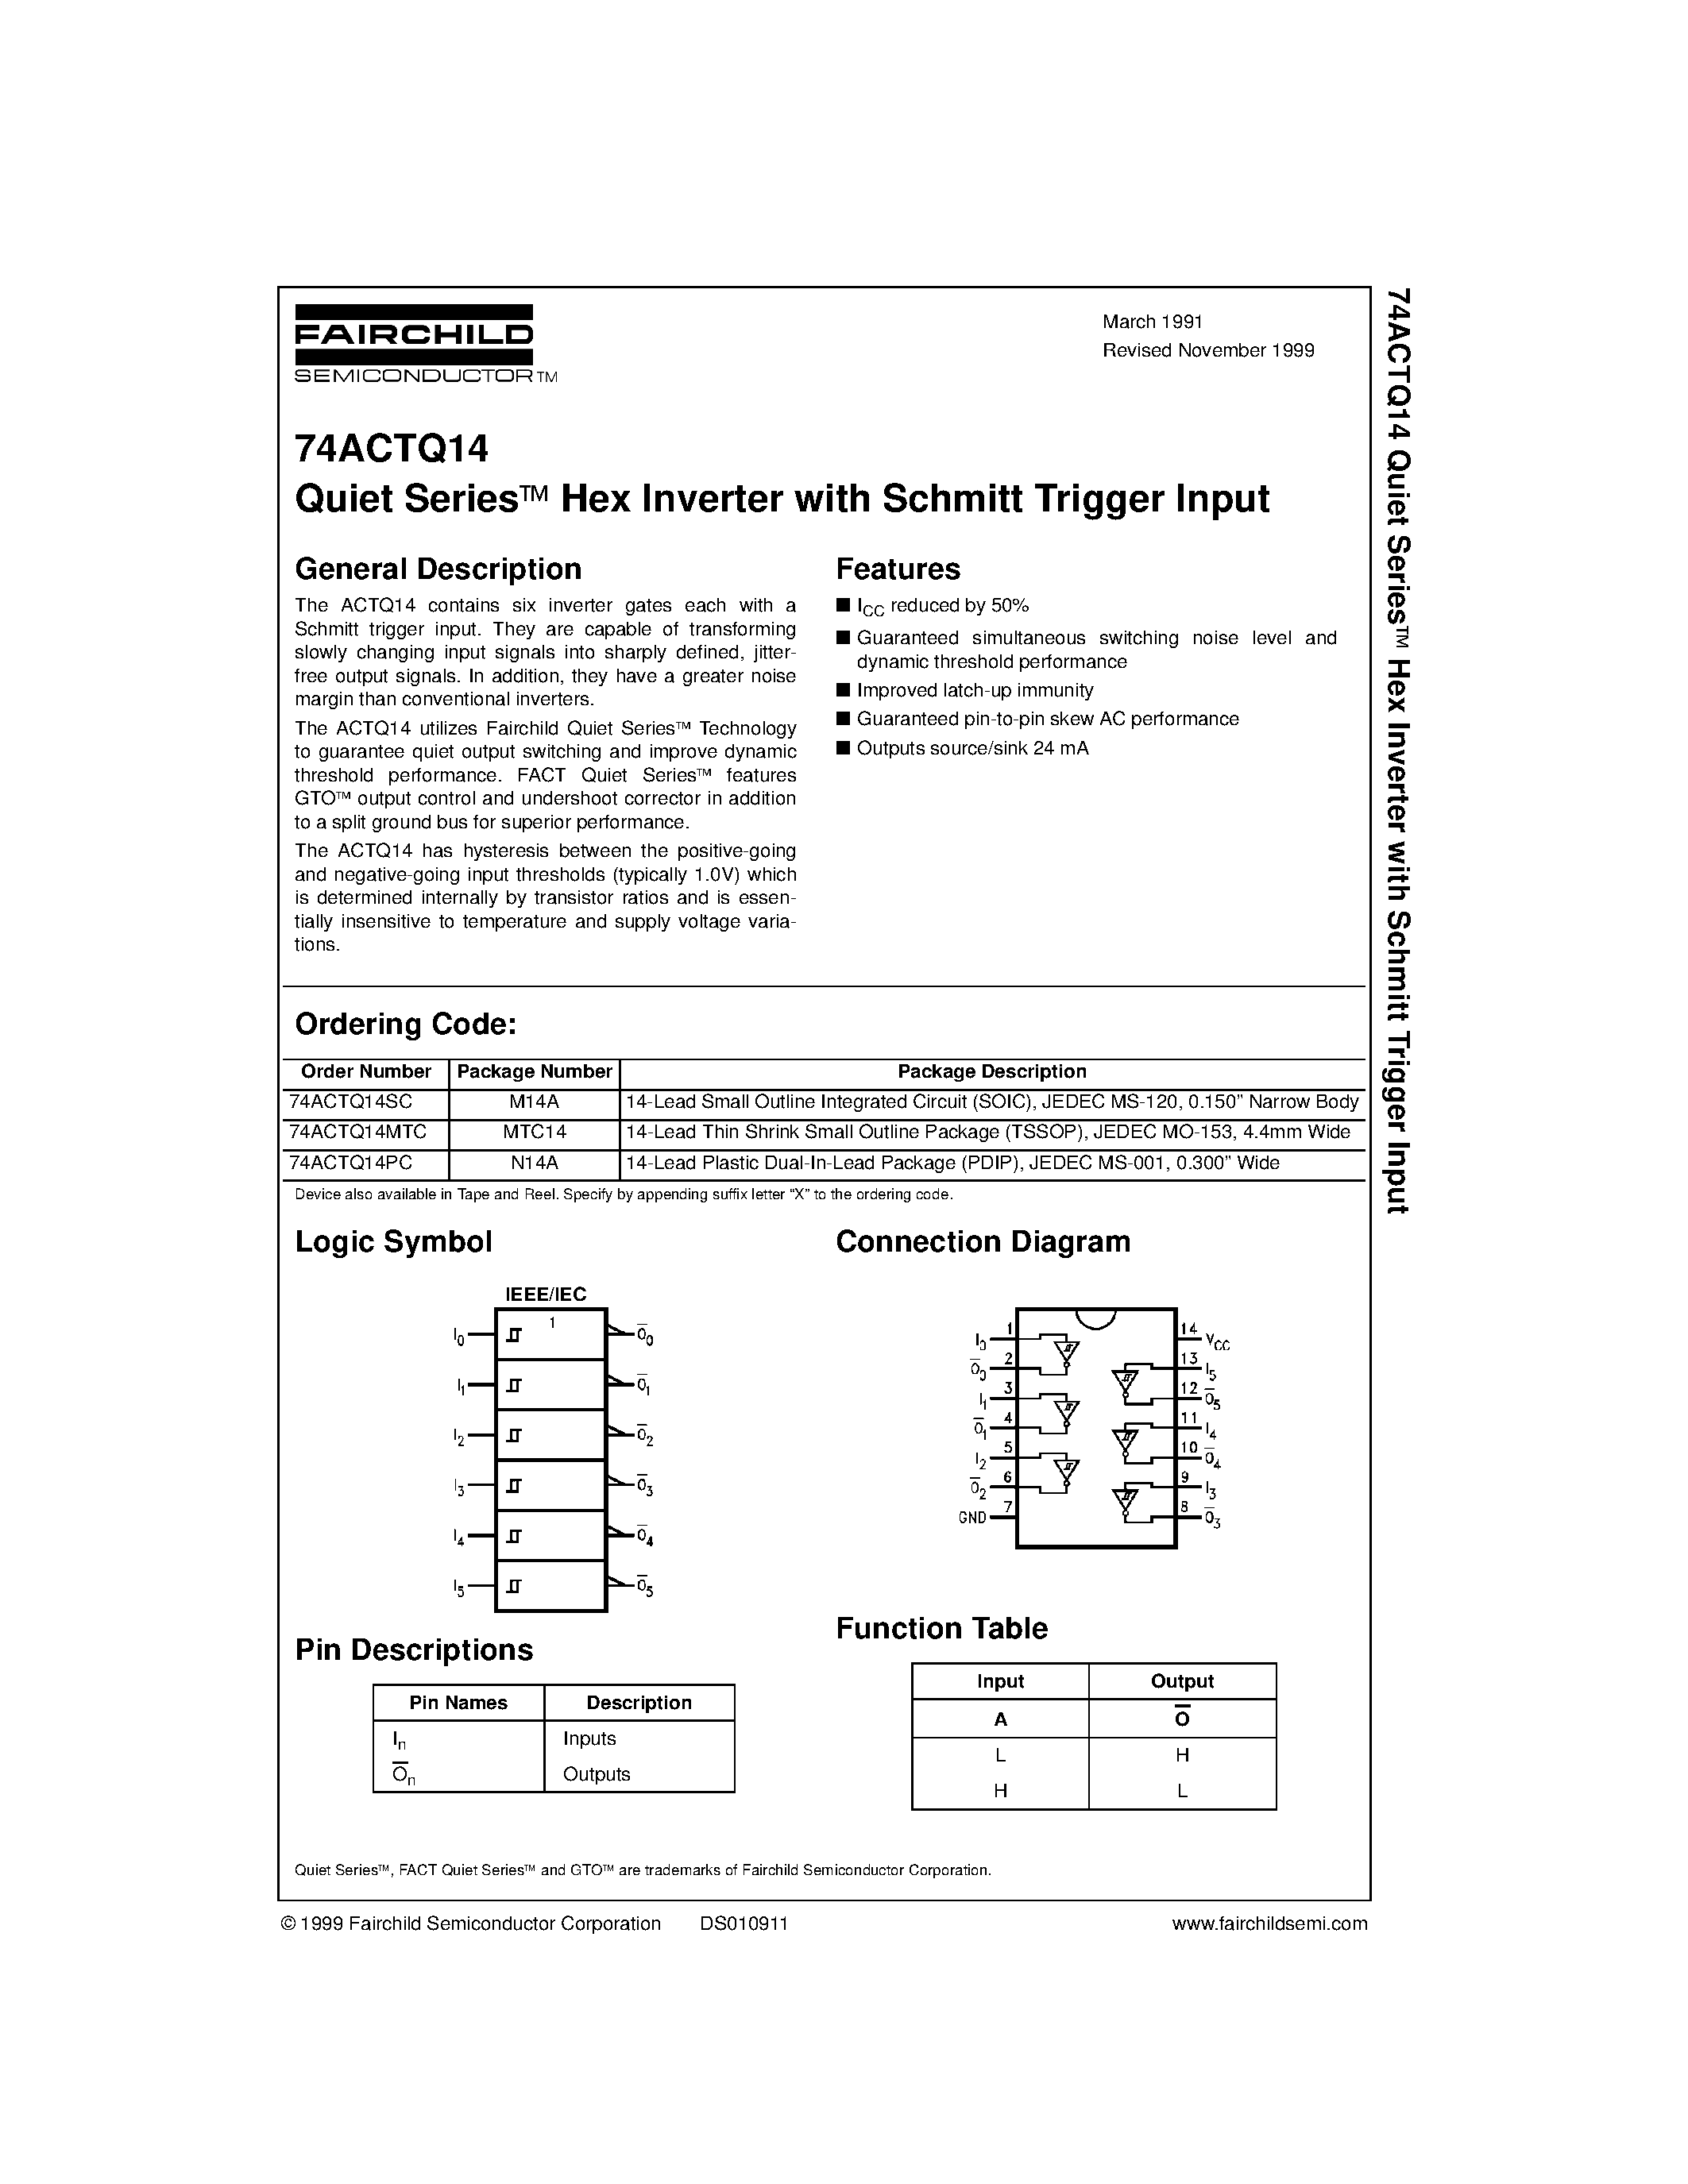 Даташит 74ACTQ14PC - Quiet Series Hex Inverter with Schmitt Trigger Input страница 1